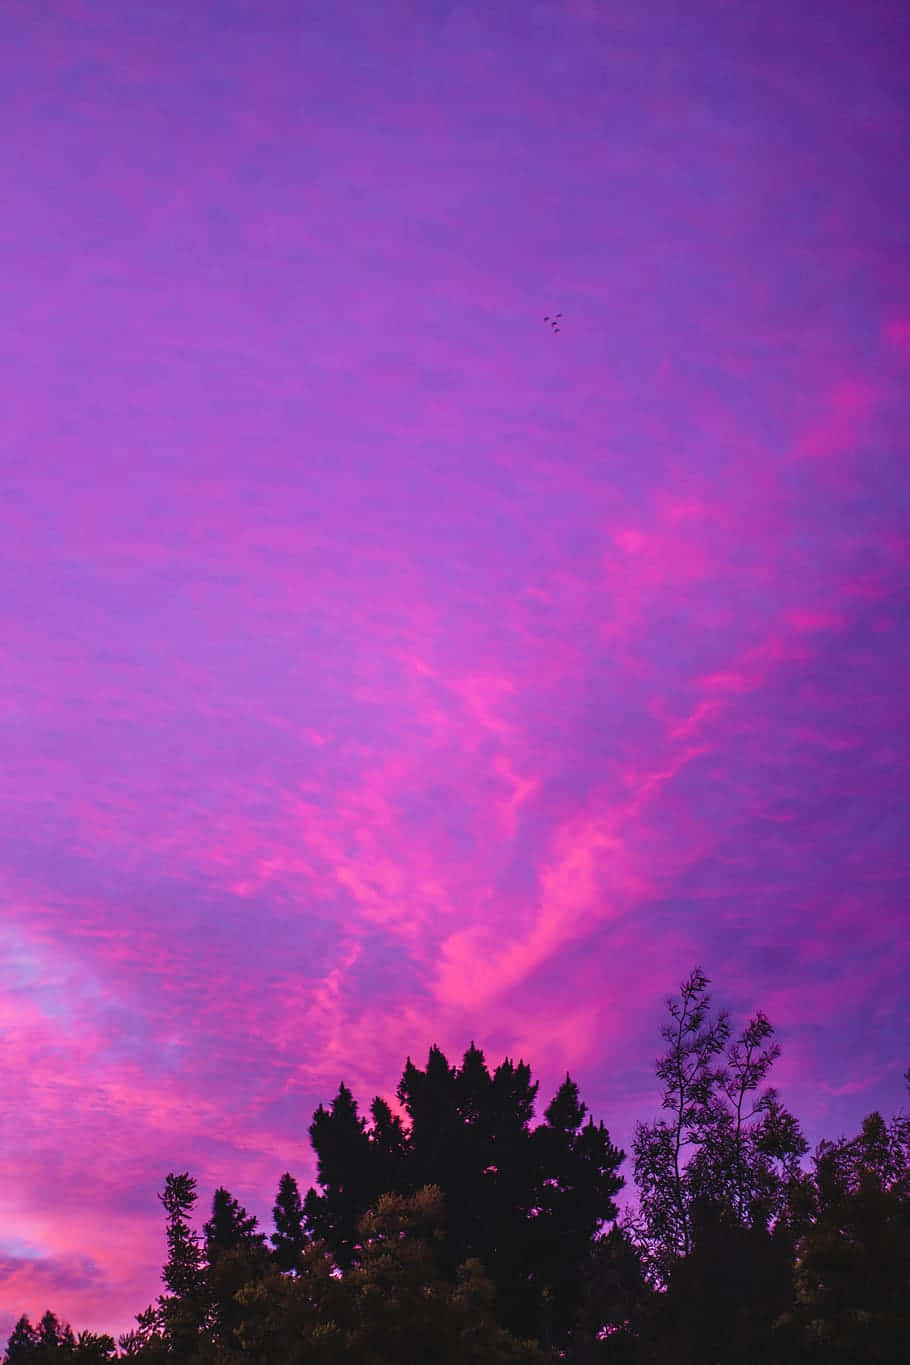 Imagensde Nuvens Neon Rosa.